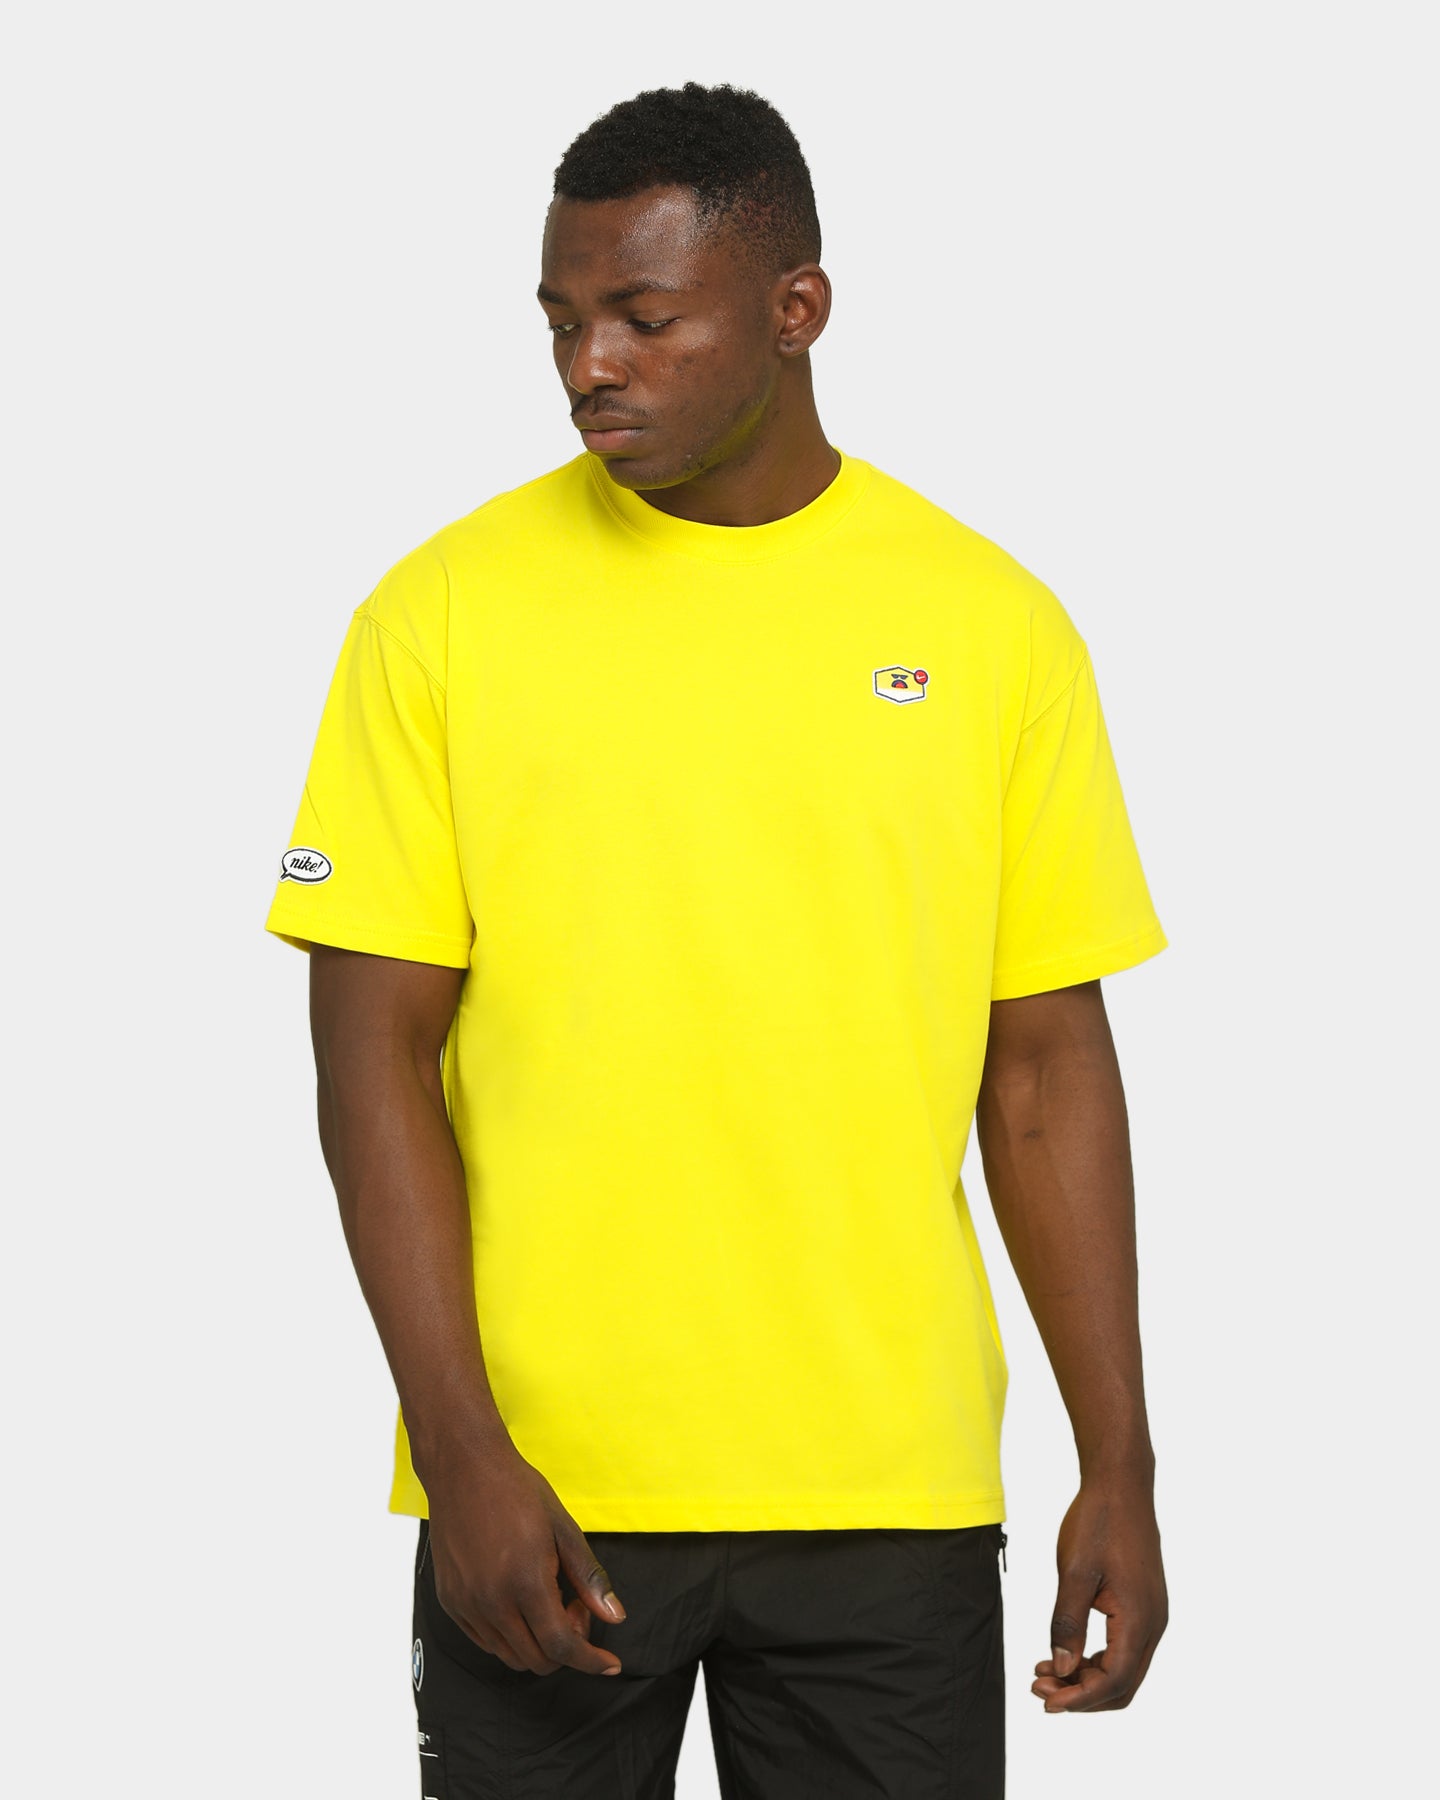 opti yellow shirts